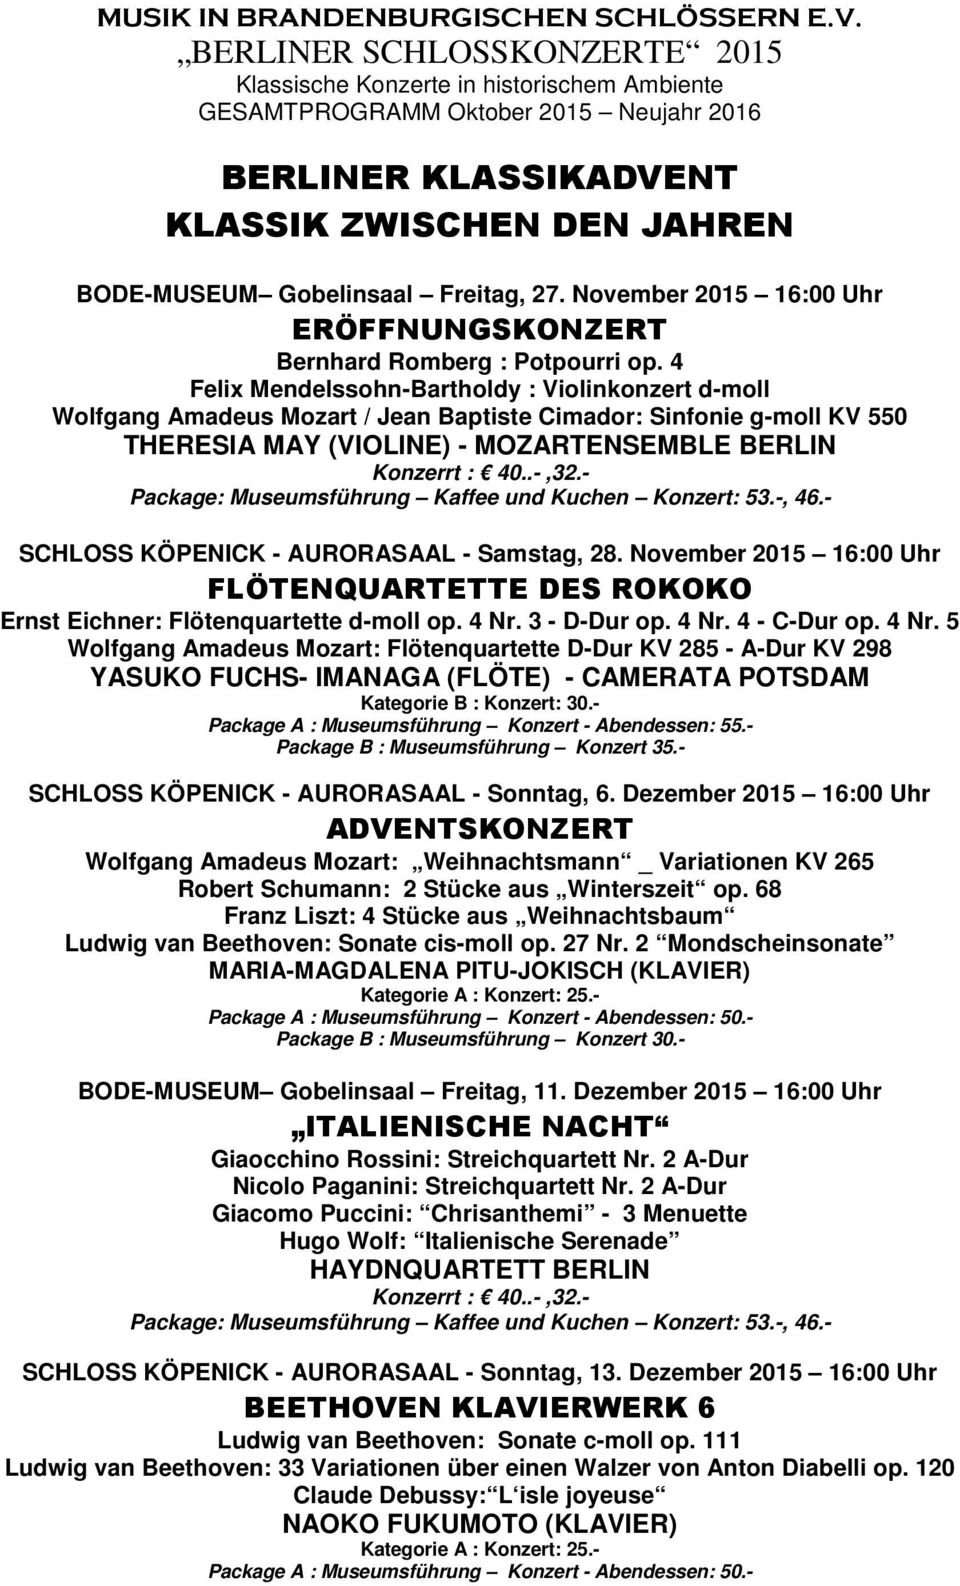 AURORASAAL - Samstag, 28. November 2015 16:00 Uhr FLÖTENQUARTETTE DES ROKOKO Ernst Eichner: Flötenquartette d-moll op. 4 Nr.